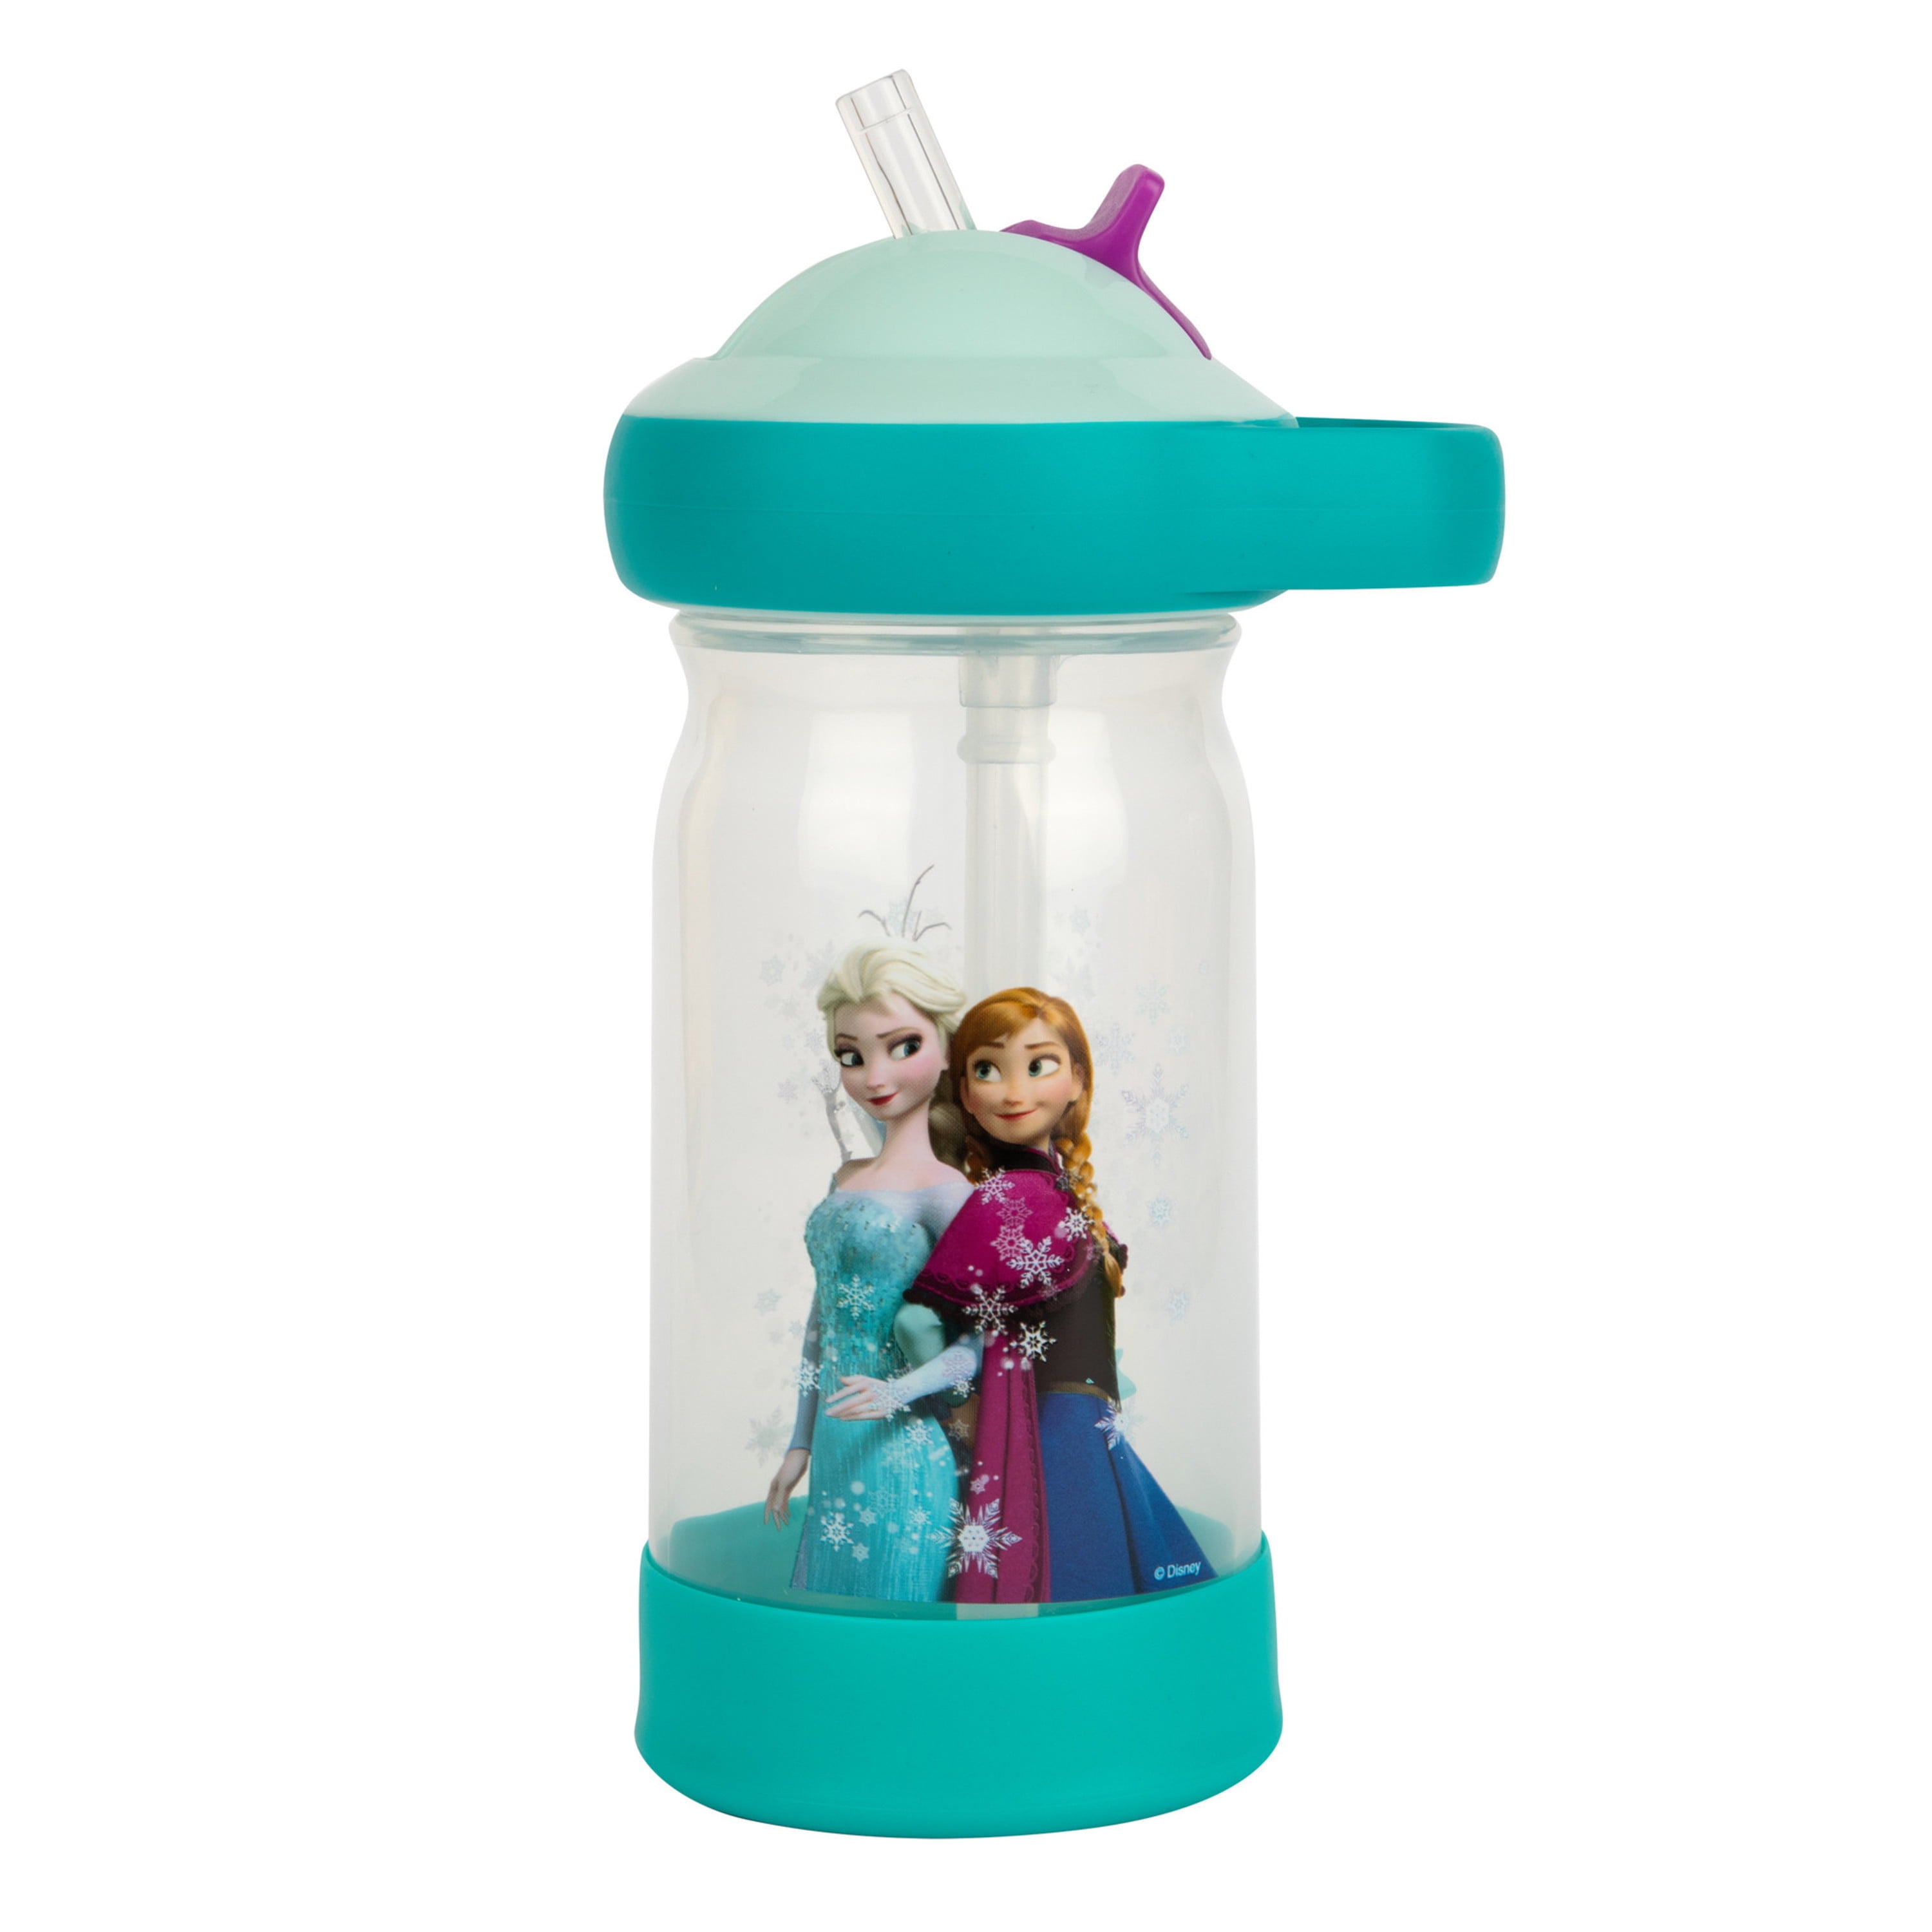 Official Frozen Baby water bottle 142689: Buy Online on Offer